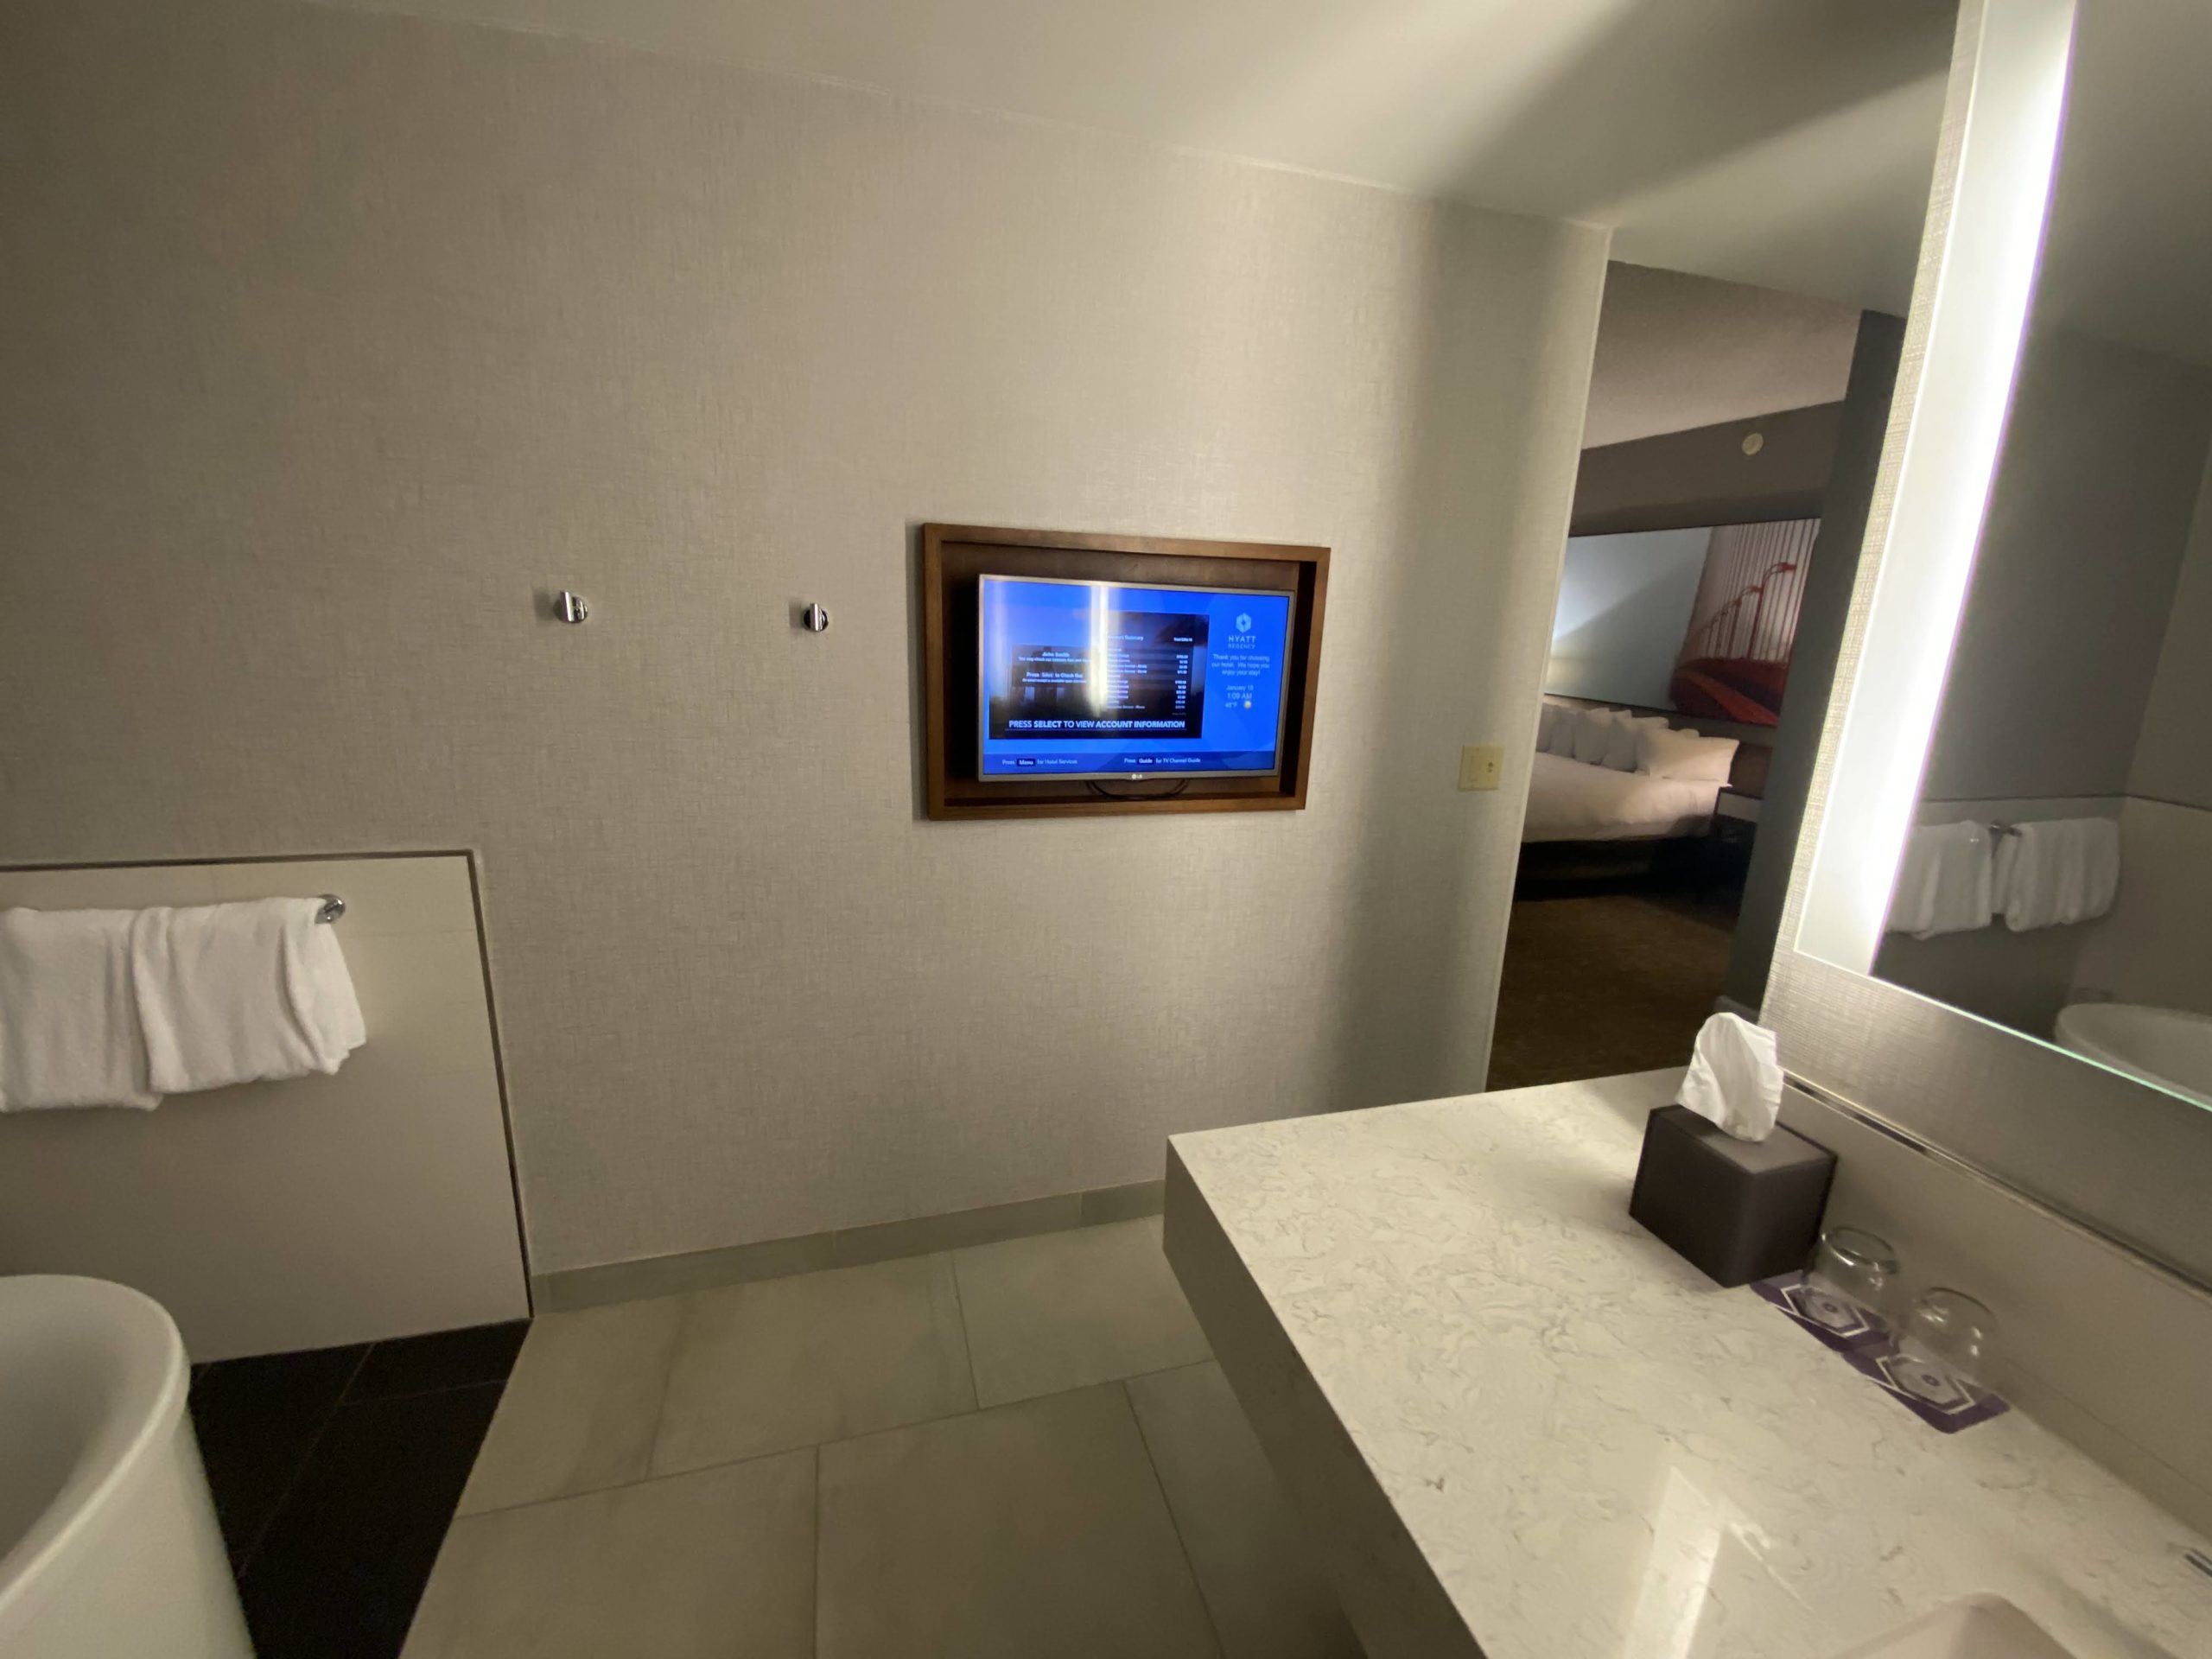 a bathroom with a tv on the wall